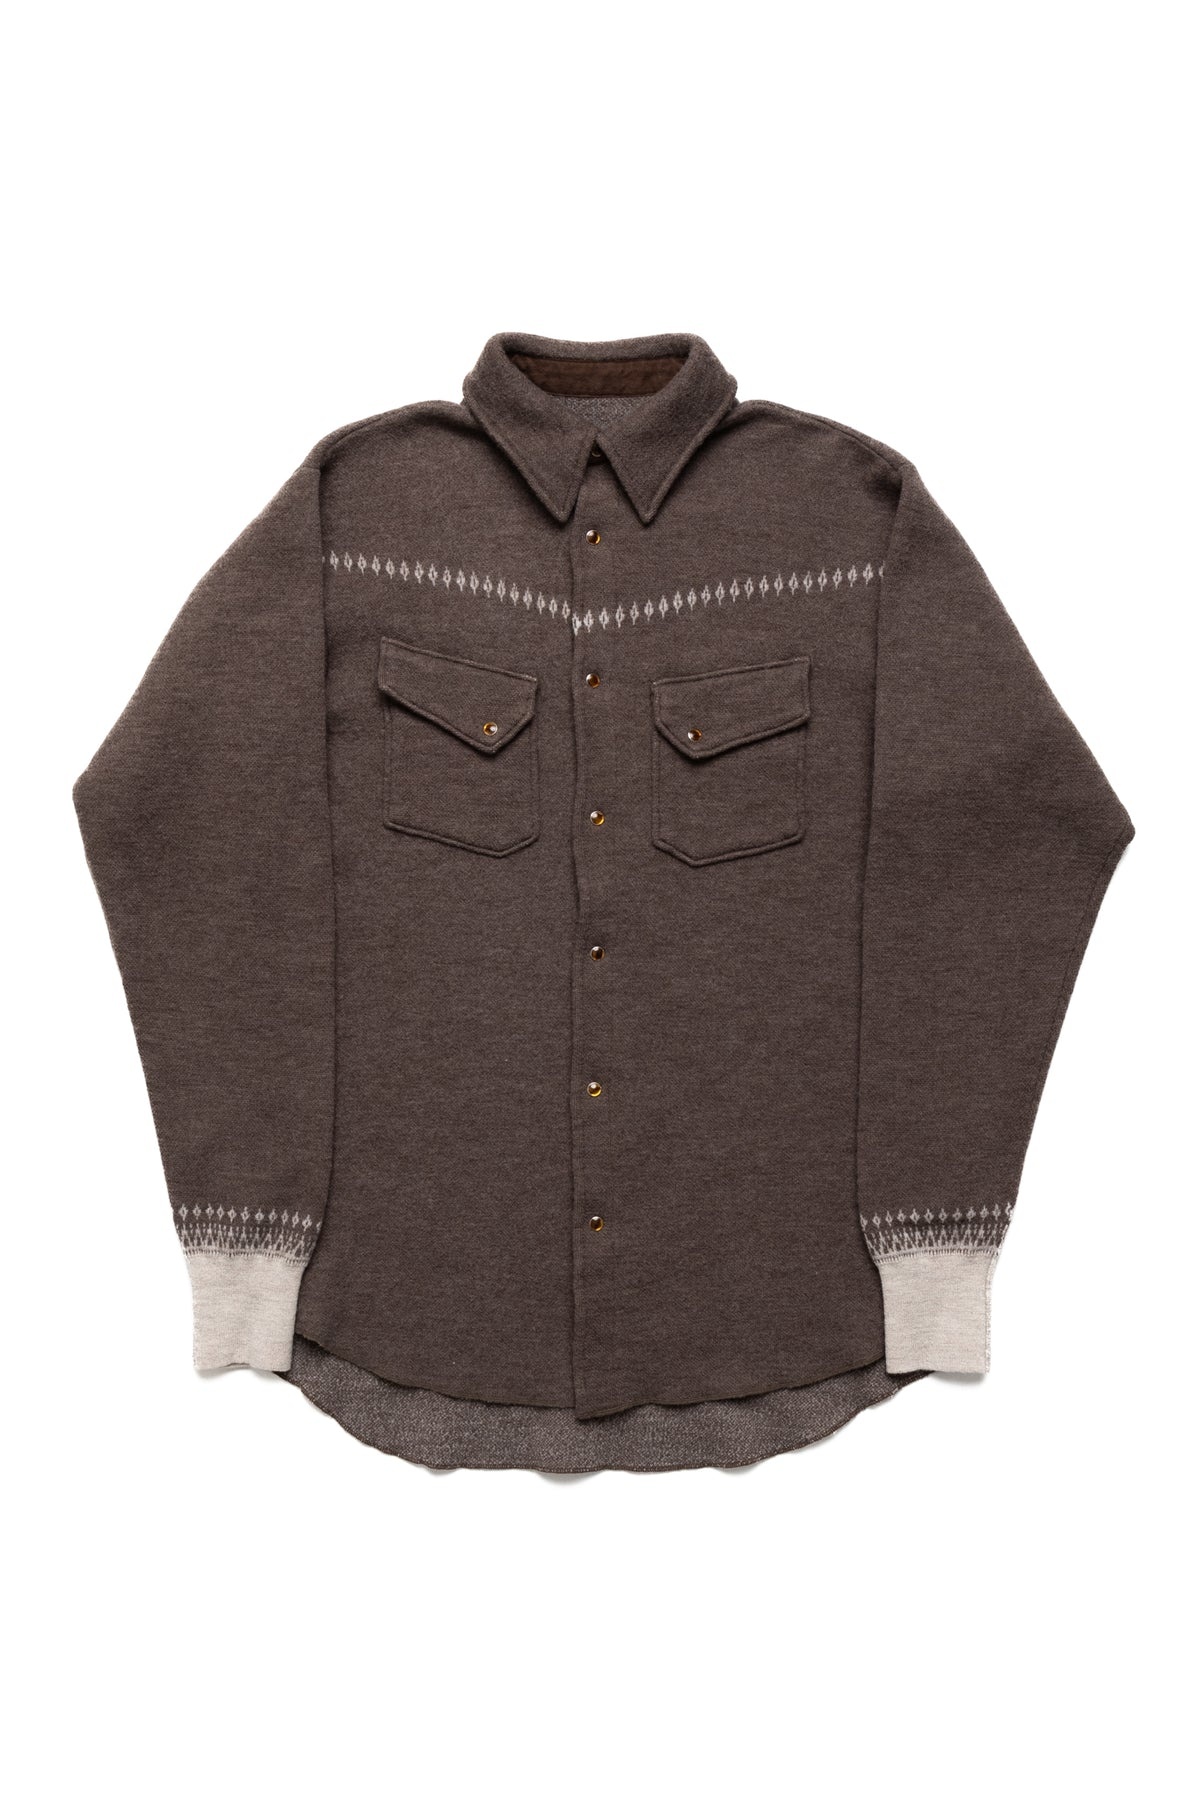 12G Fulling Knit HUSKEY Western Shirt - Brown - 1